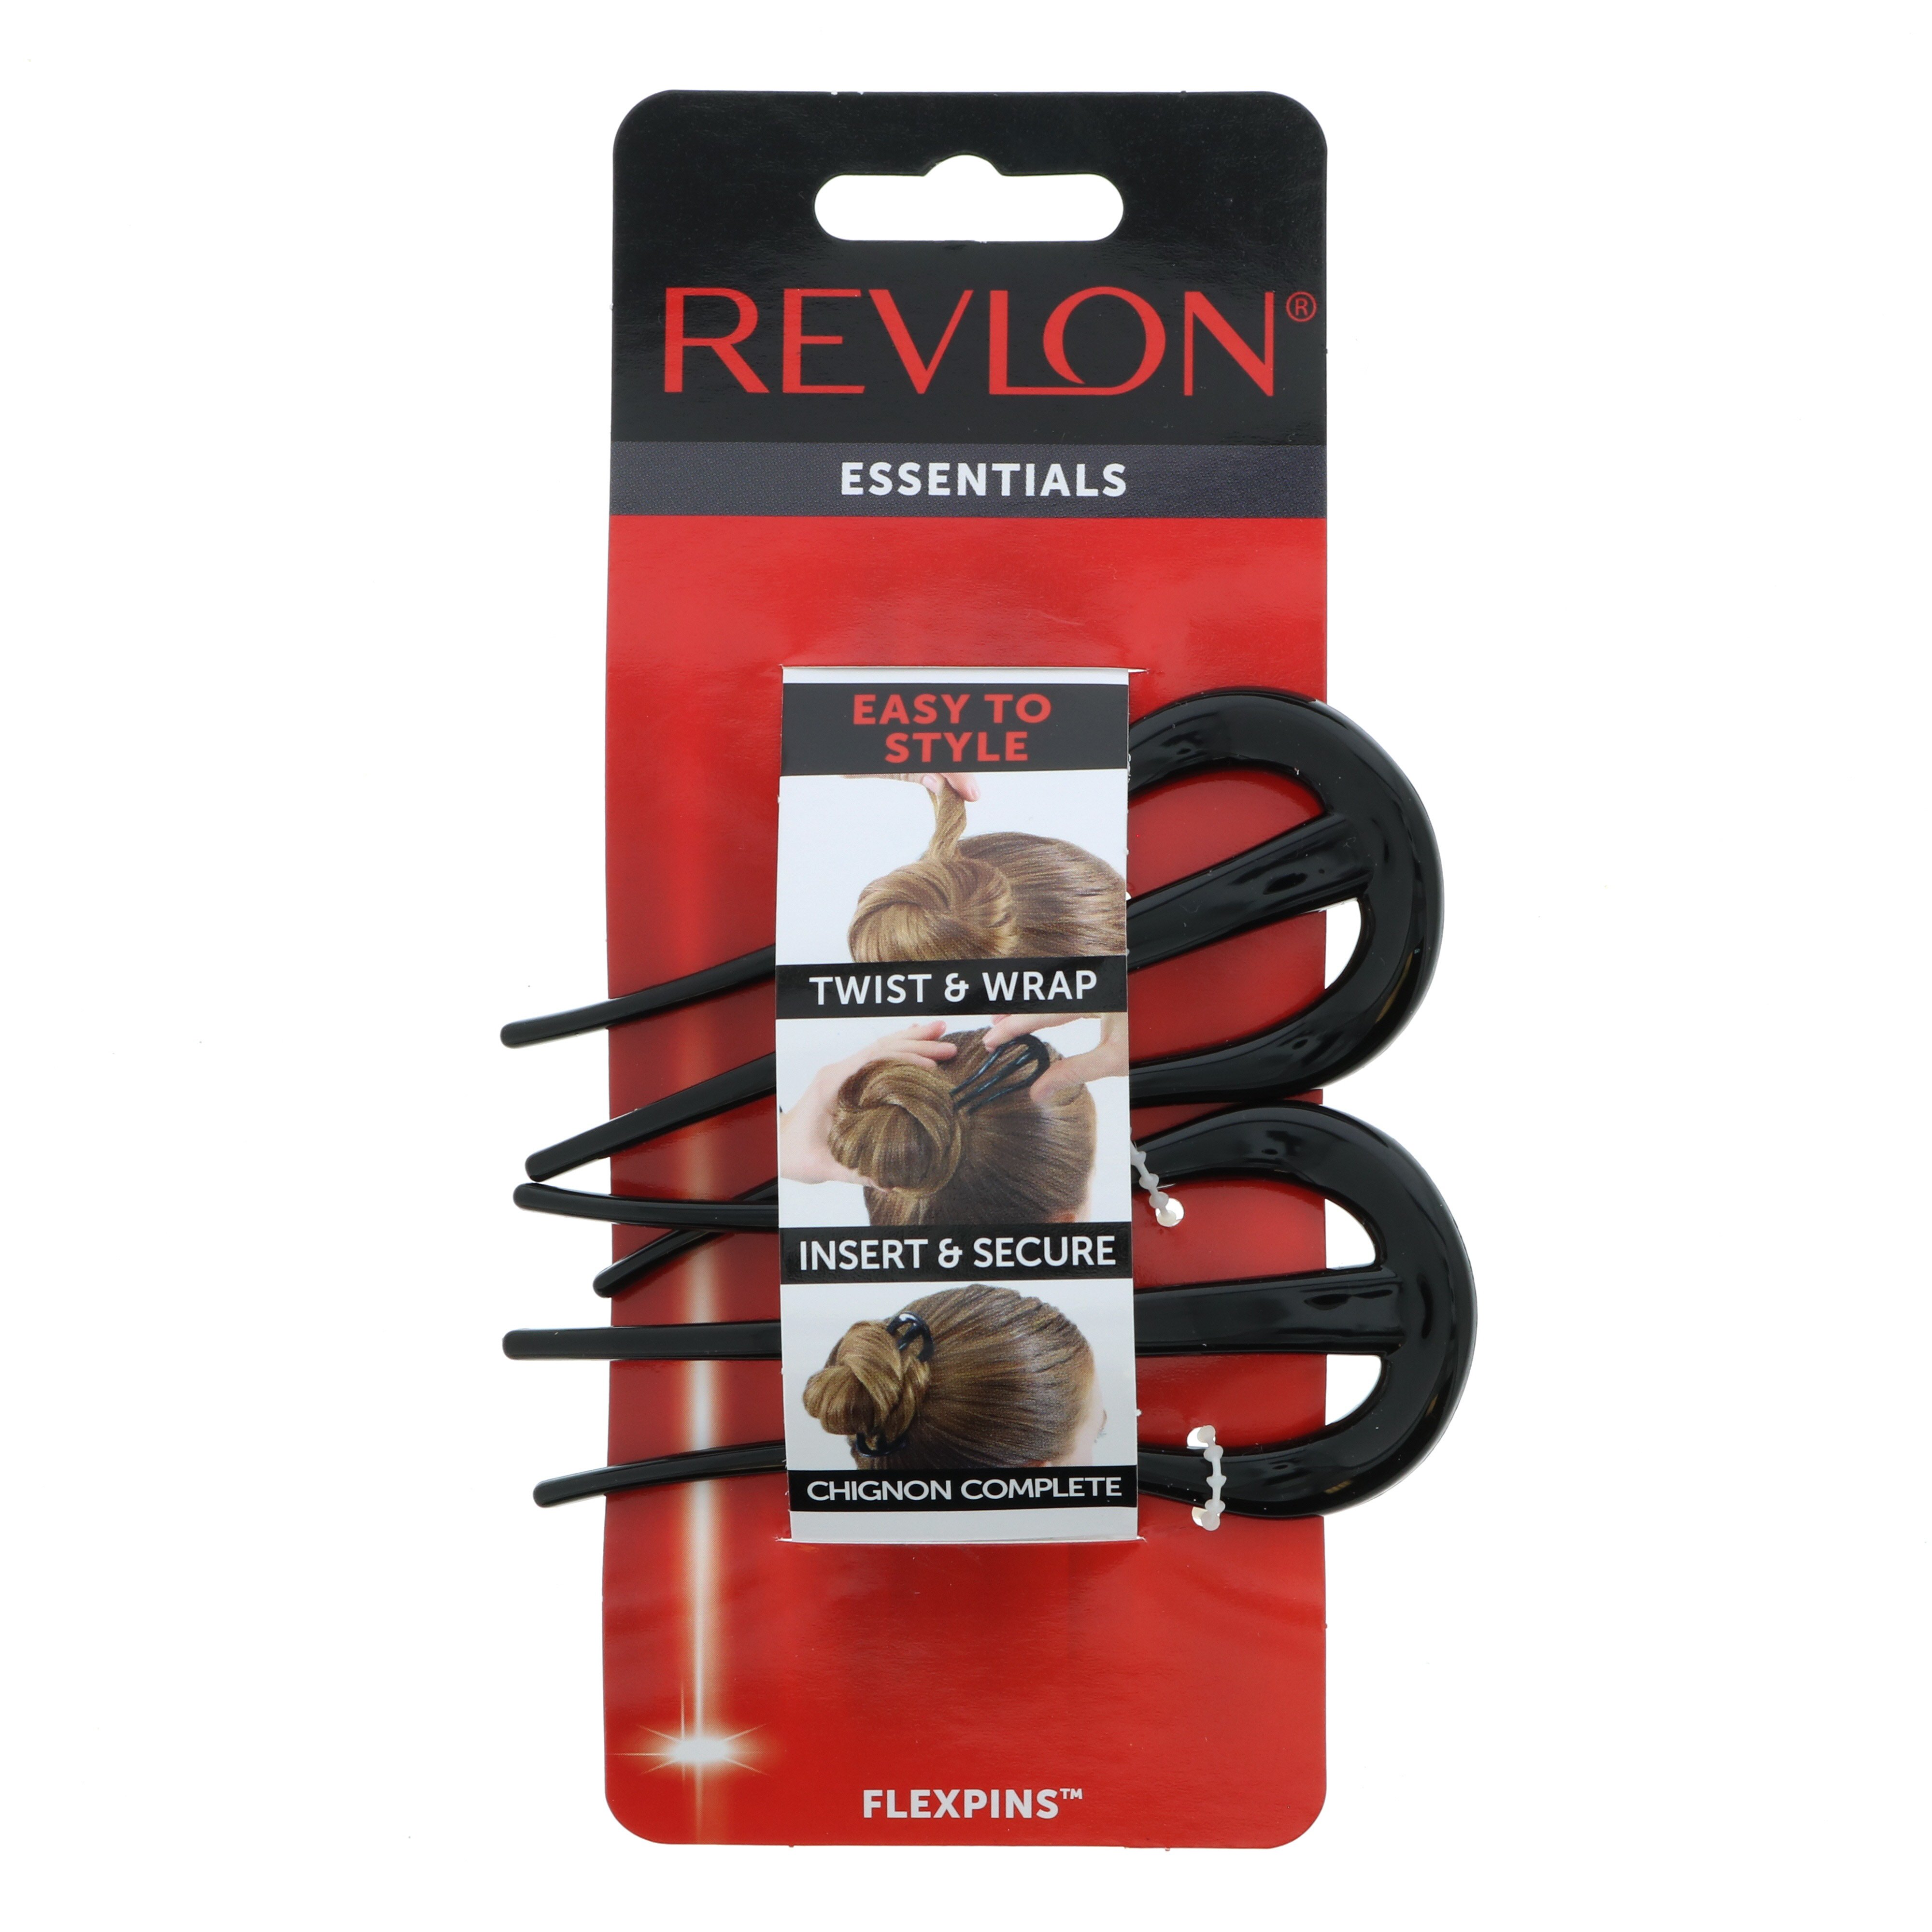 Pin by Carmen Hidalgo on Products I Love | Revlon 